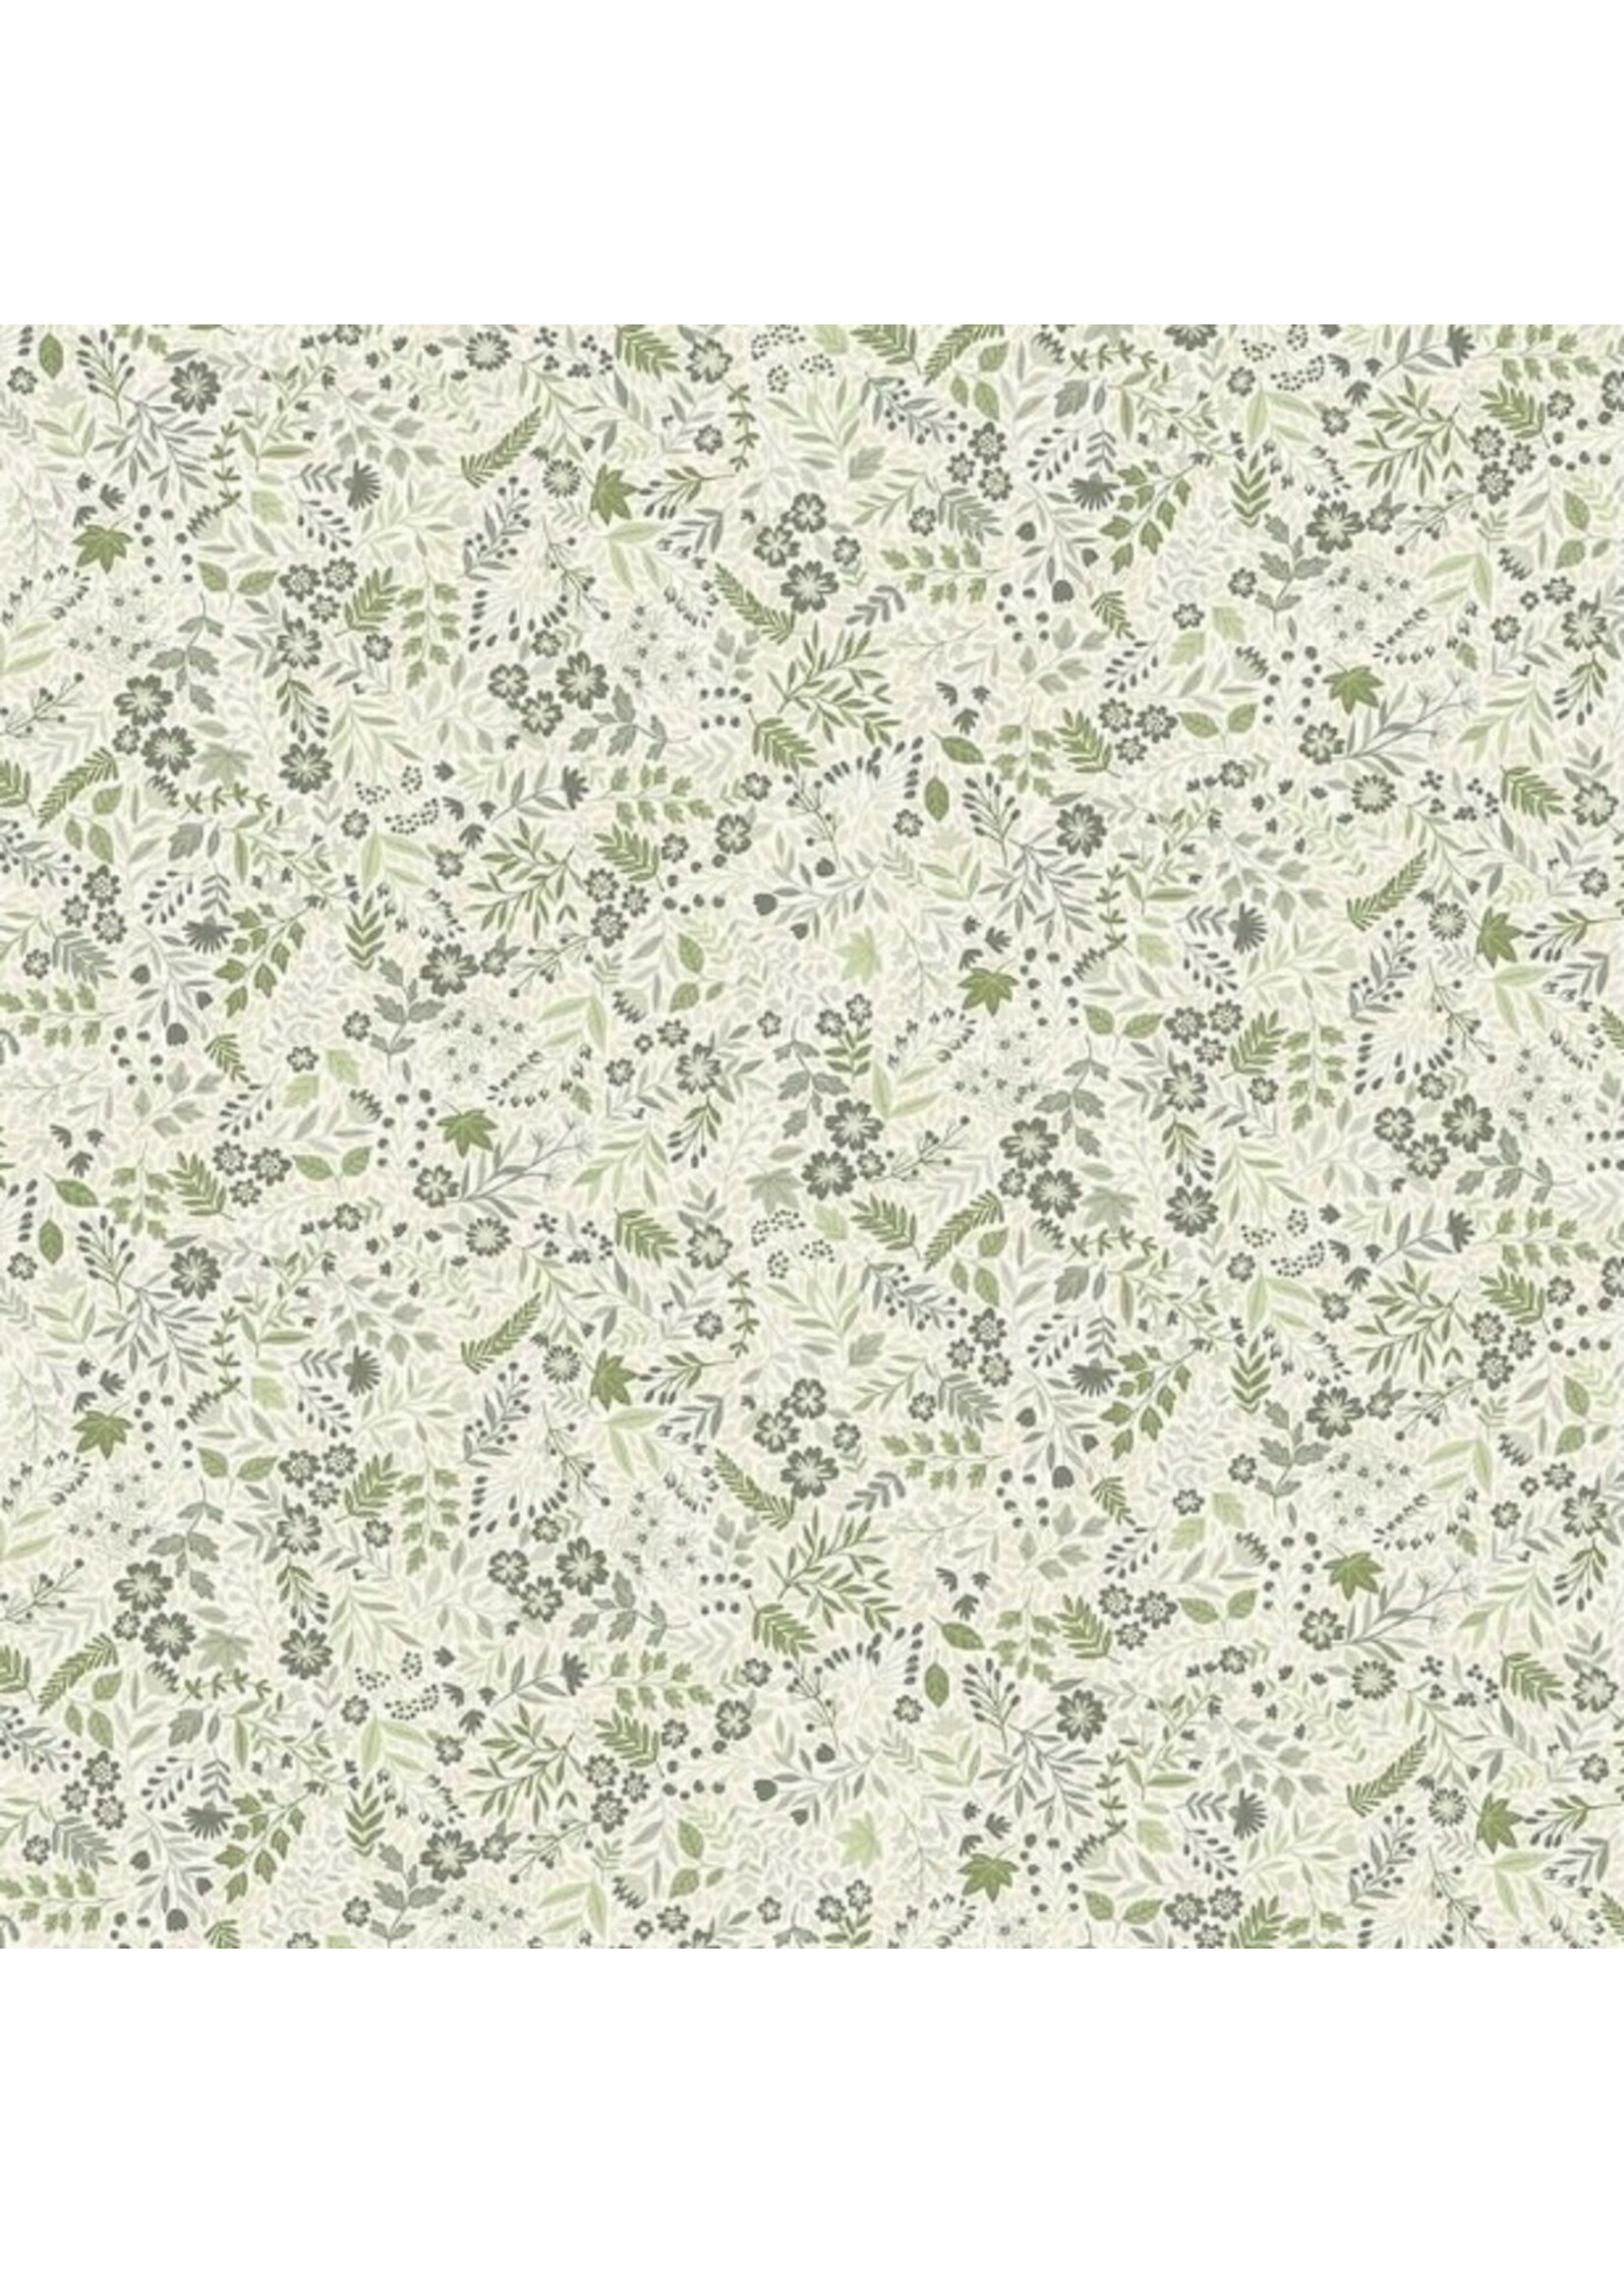 Andover Fabrics Foxwood - Wildflower - Green on Cream - 17GQ